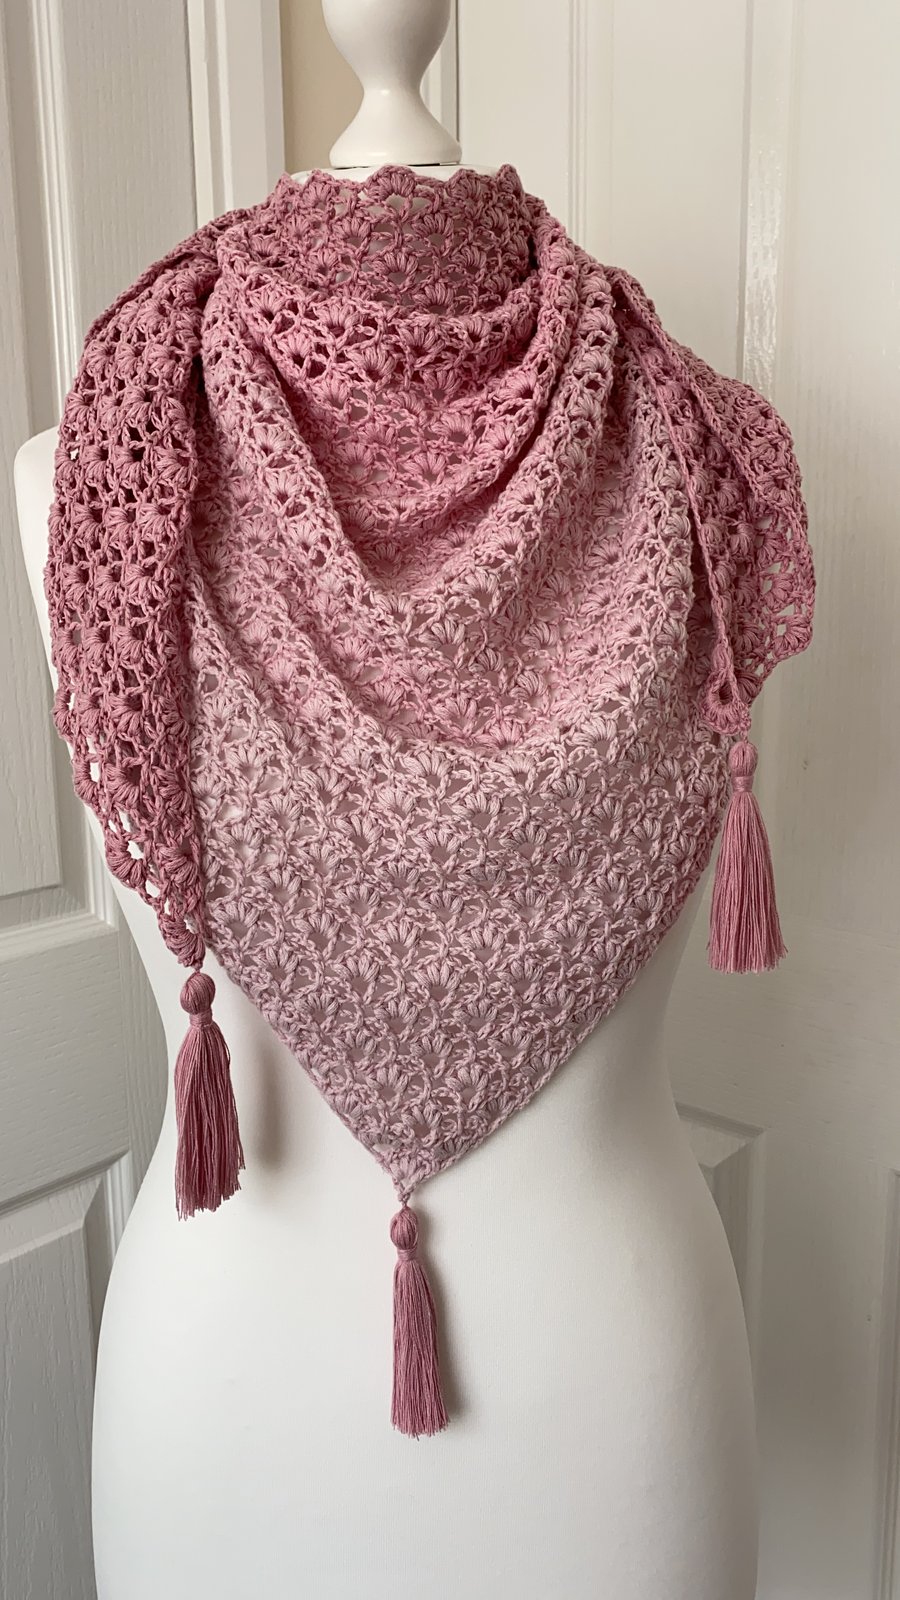 Handmade crochet wrap or shawl